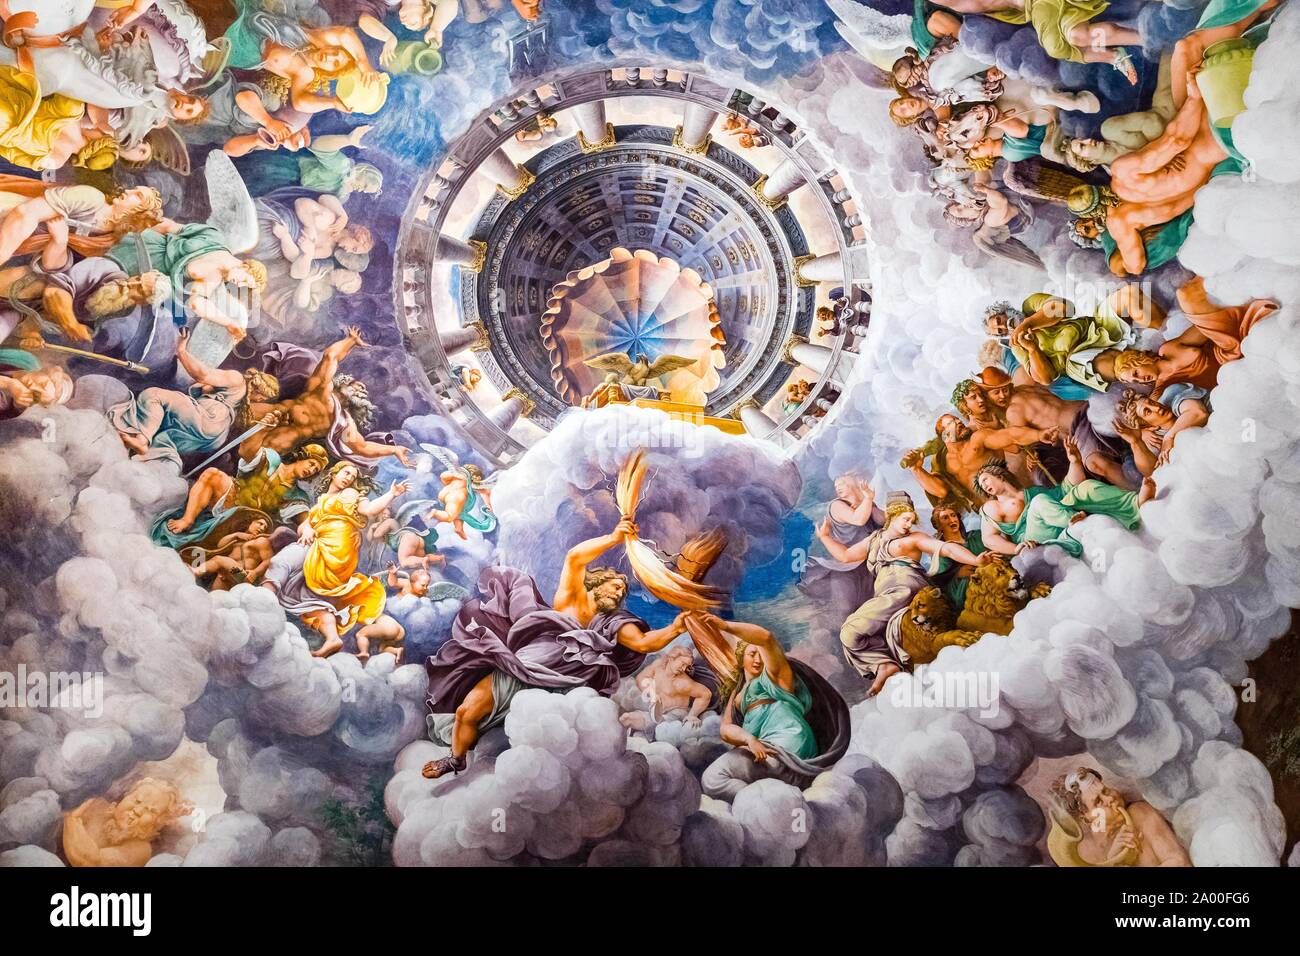 Gods olympus -Fotos und -Bildmaterial in hoher Auflösung – Alamy